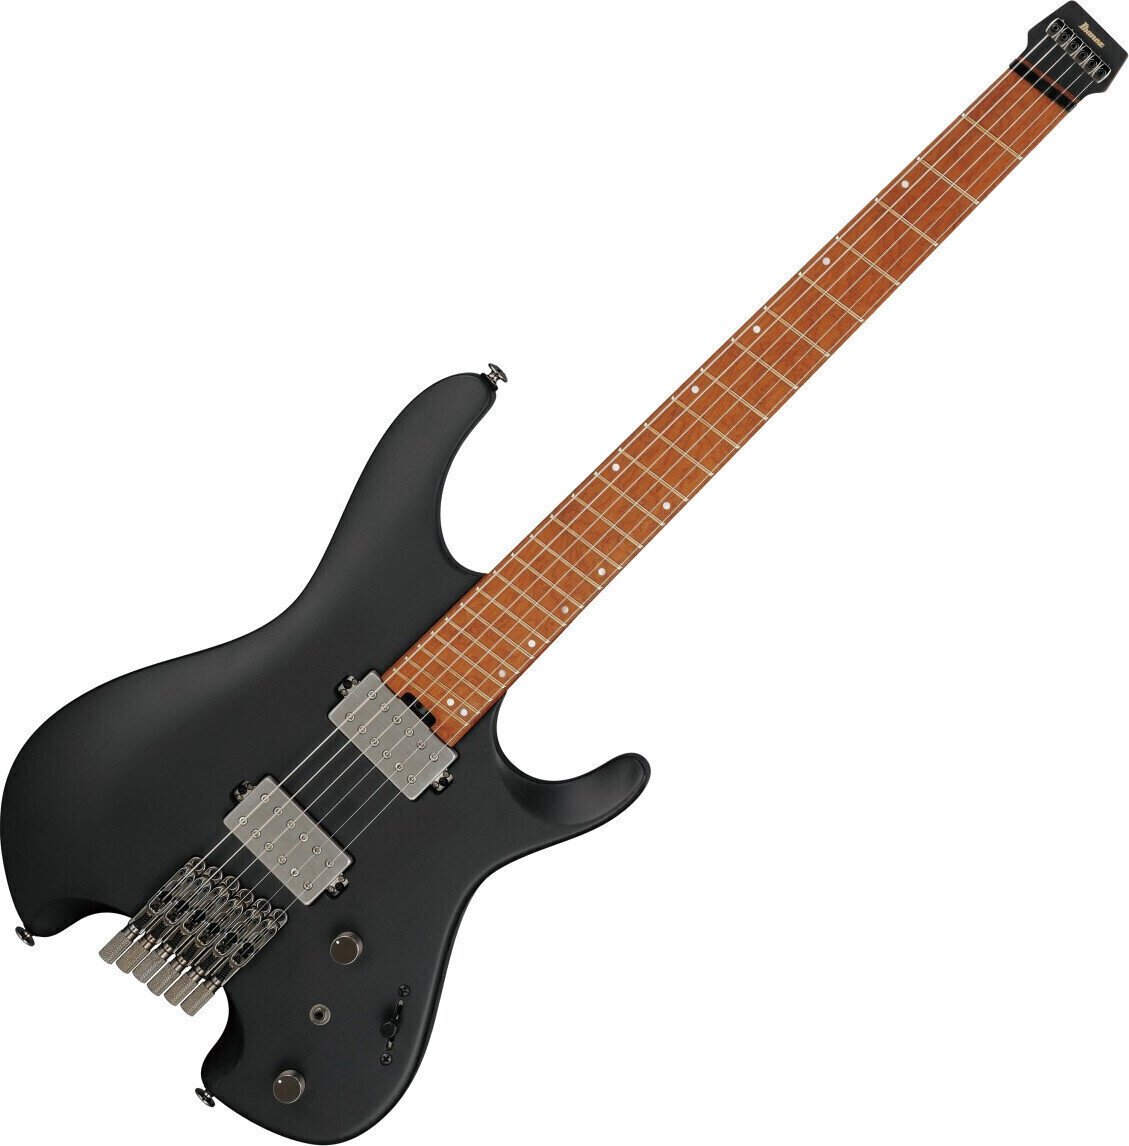 Headless gitara Ibanez QX52-BKF Black Flat